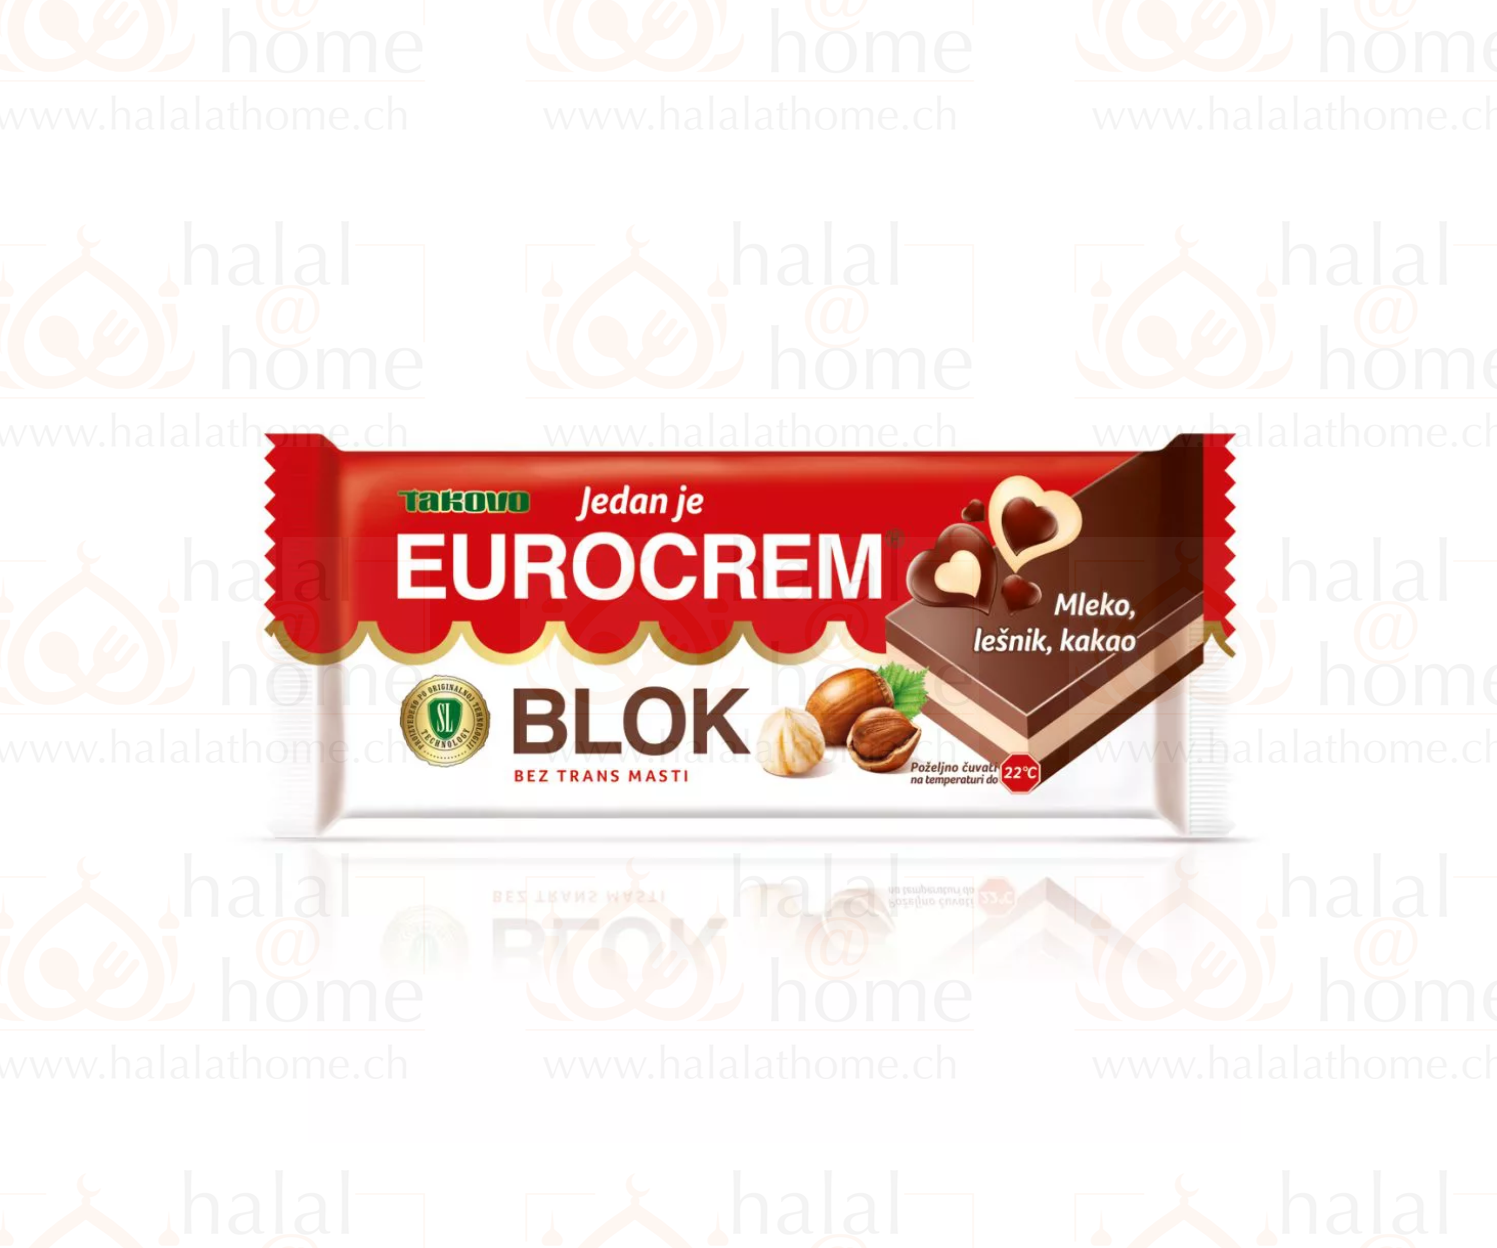 Eurokrem  Blok 60x0.50g(stk.0.70fr.)